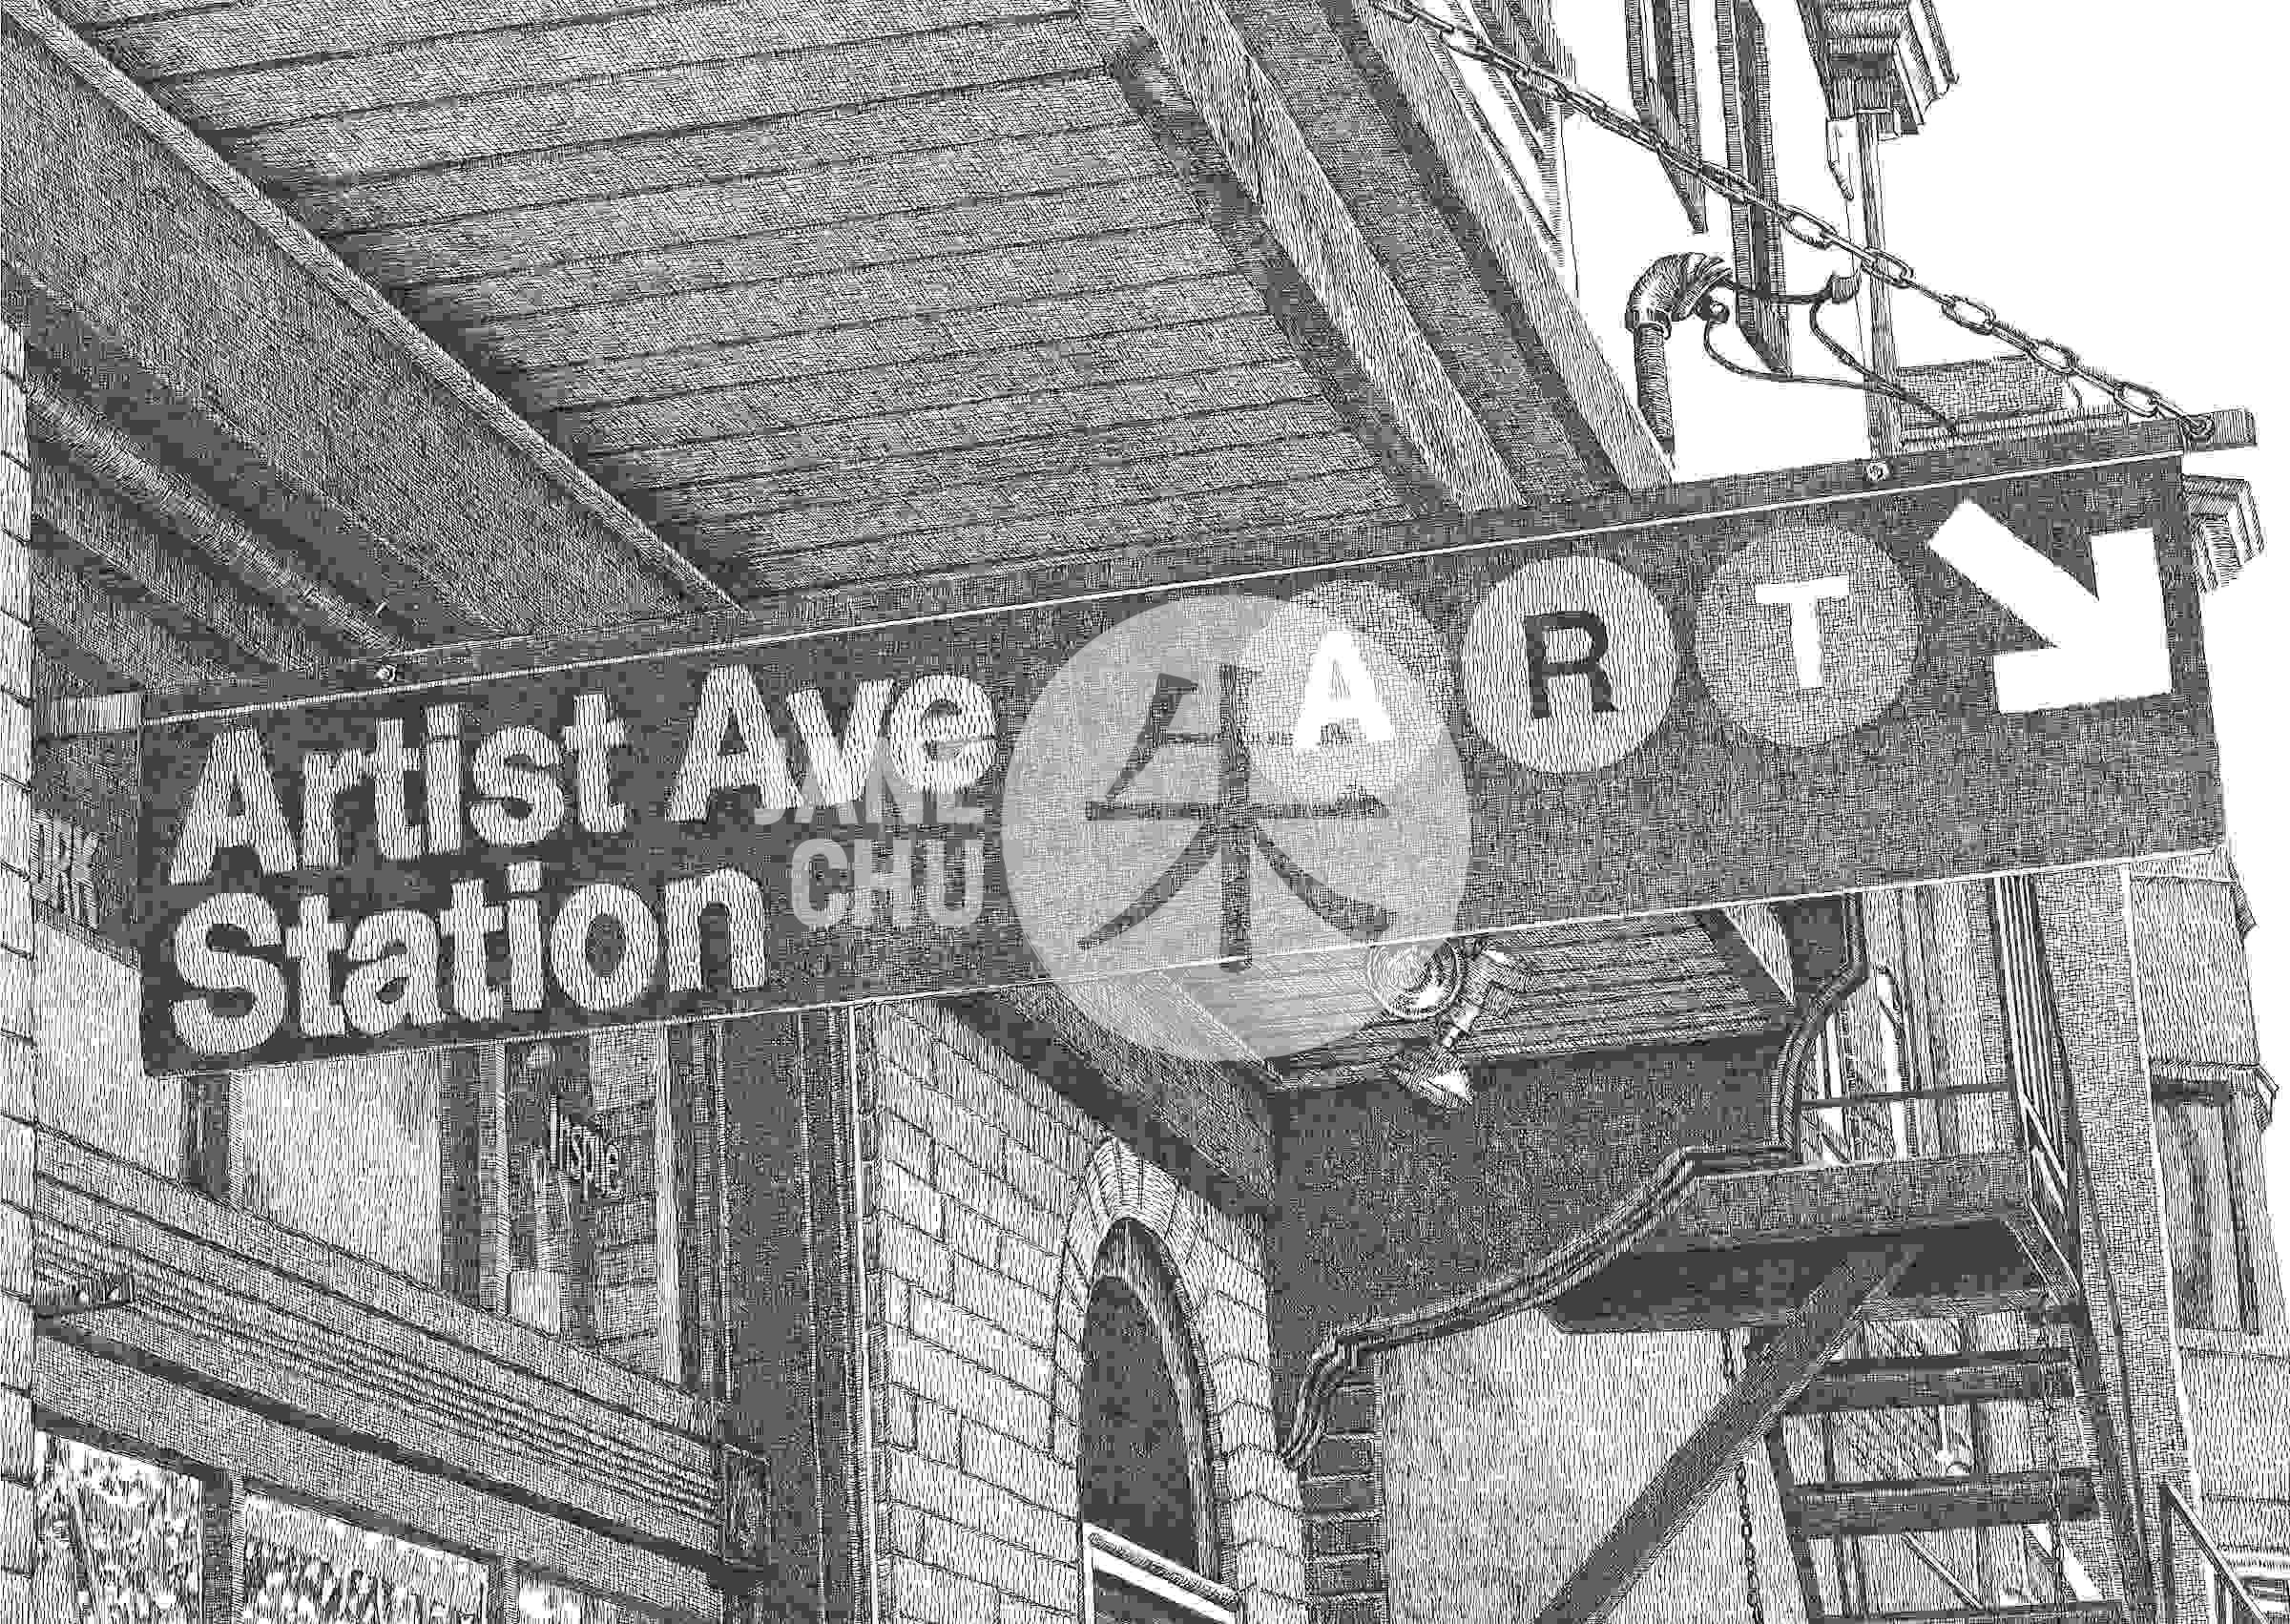 Artist Avenue Station by Jane Chu